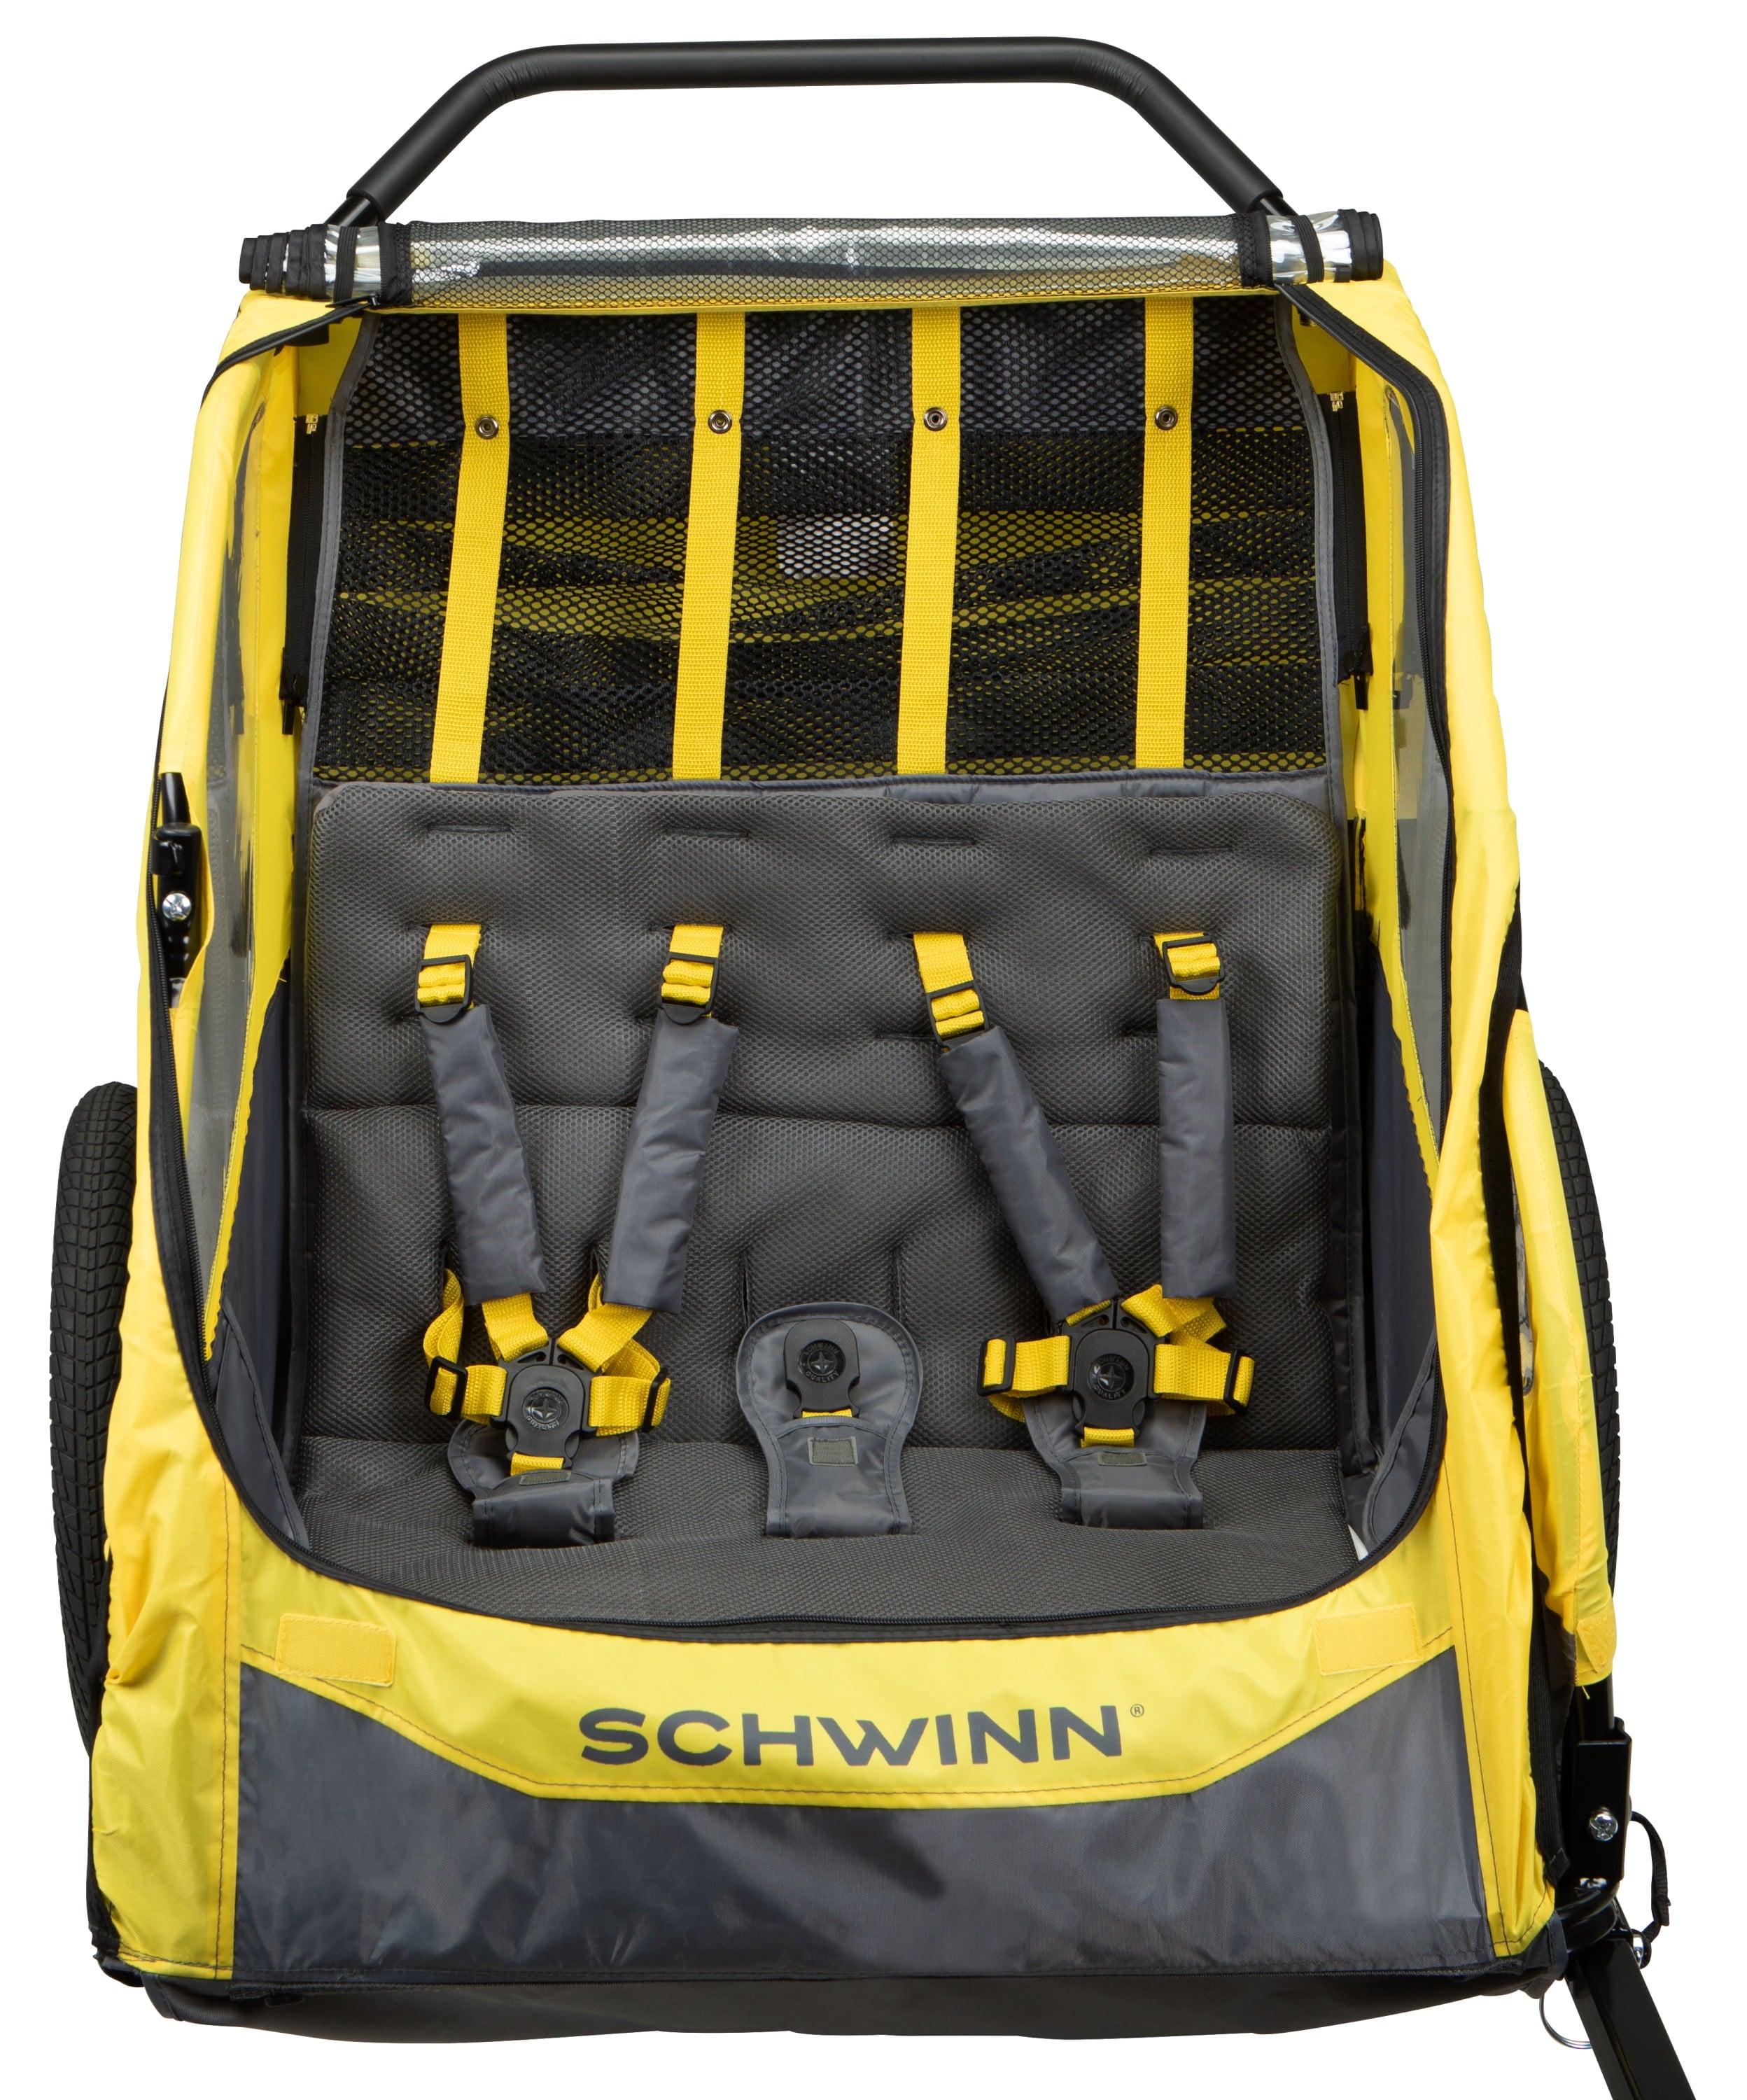 Schwinn Willow River Toddler Unisex Trailer/Stroller, Yellow/Black